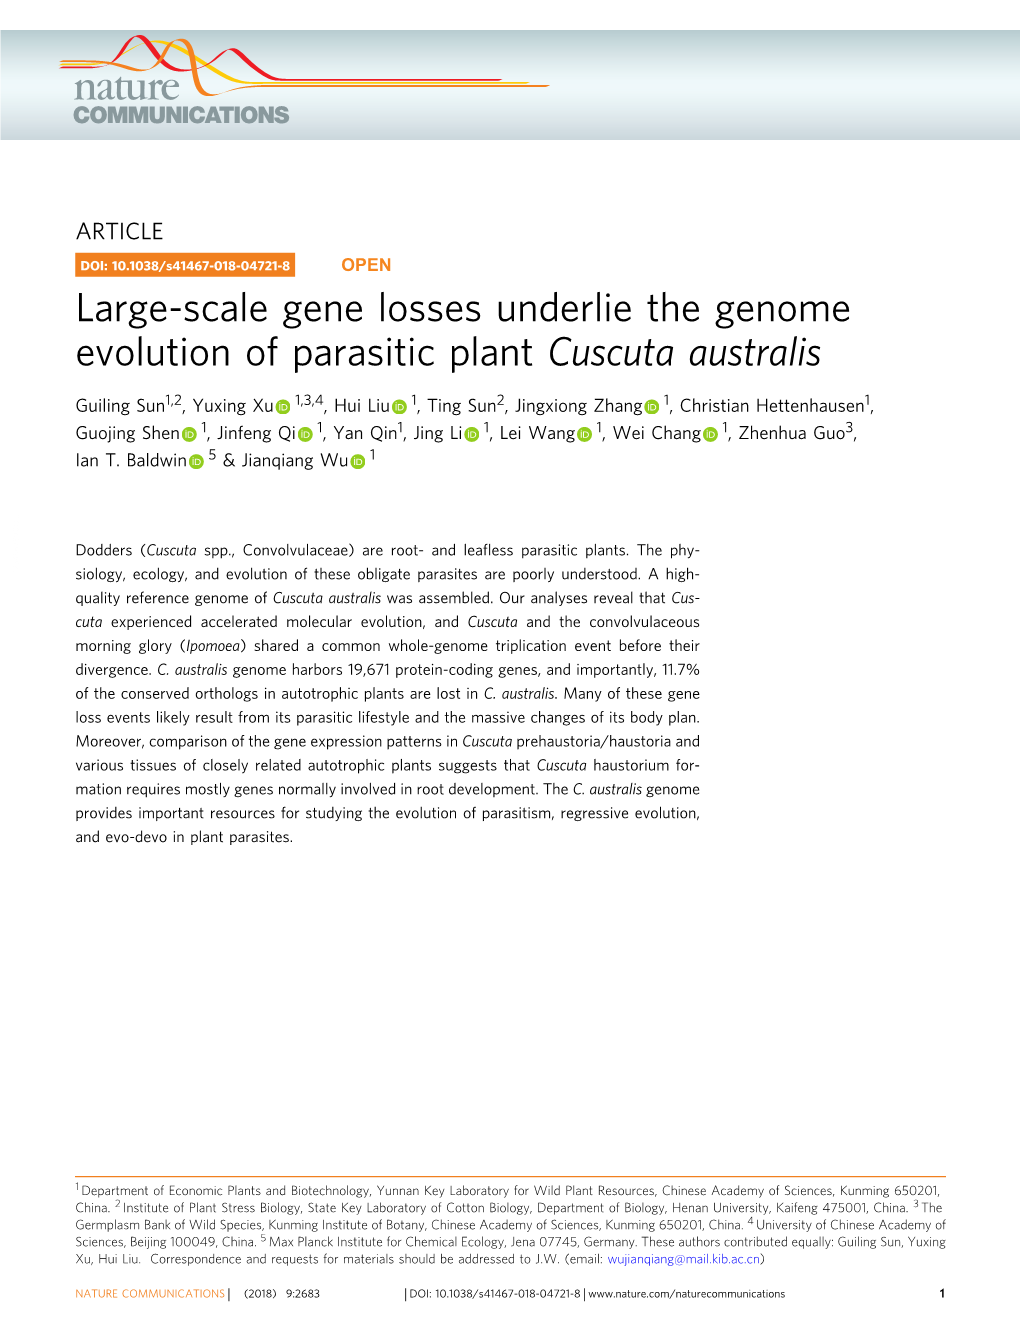 Large-Scale Gene Losses Underlie the Genome Evolution of Parasitic Plant Cuscuta Australis